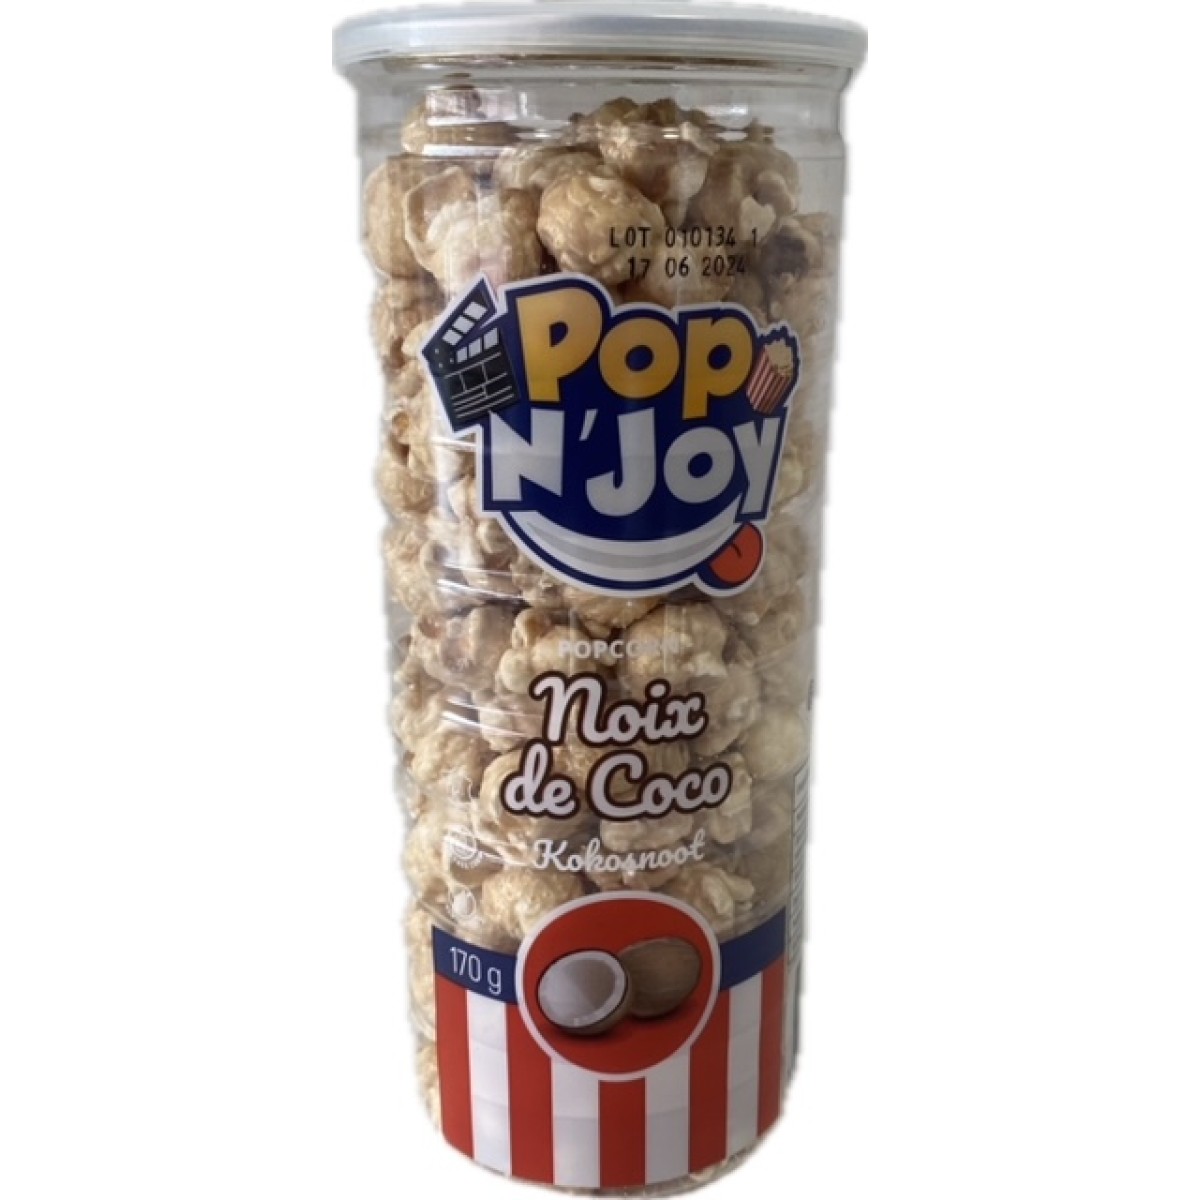 Popcorn Pop n'joy noix de coco 